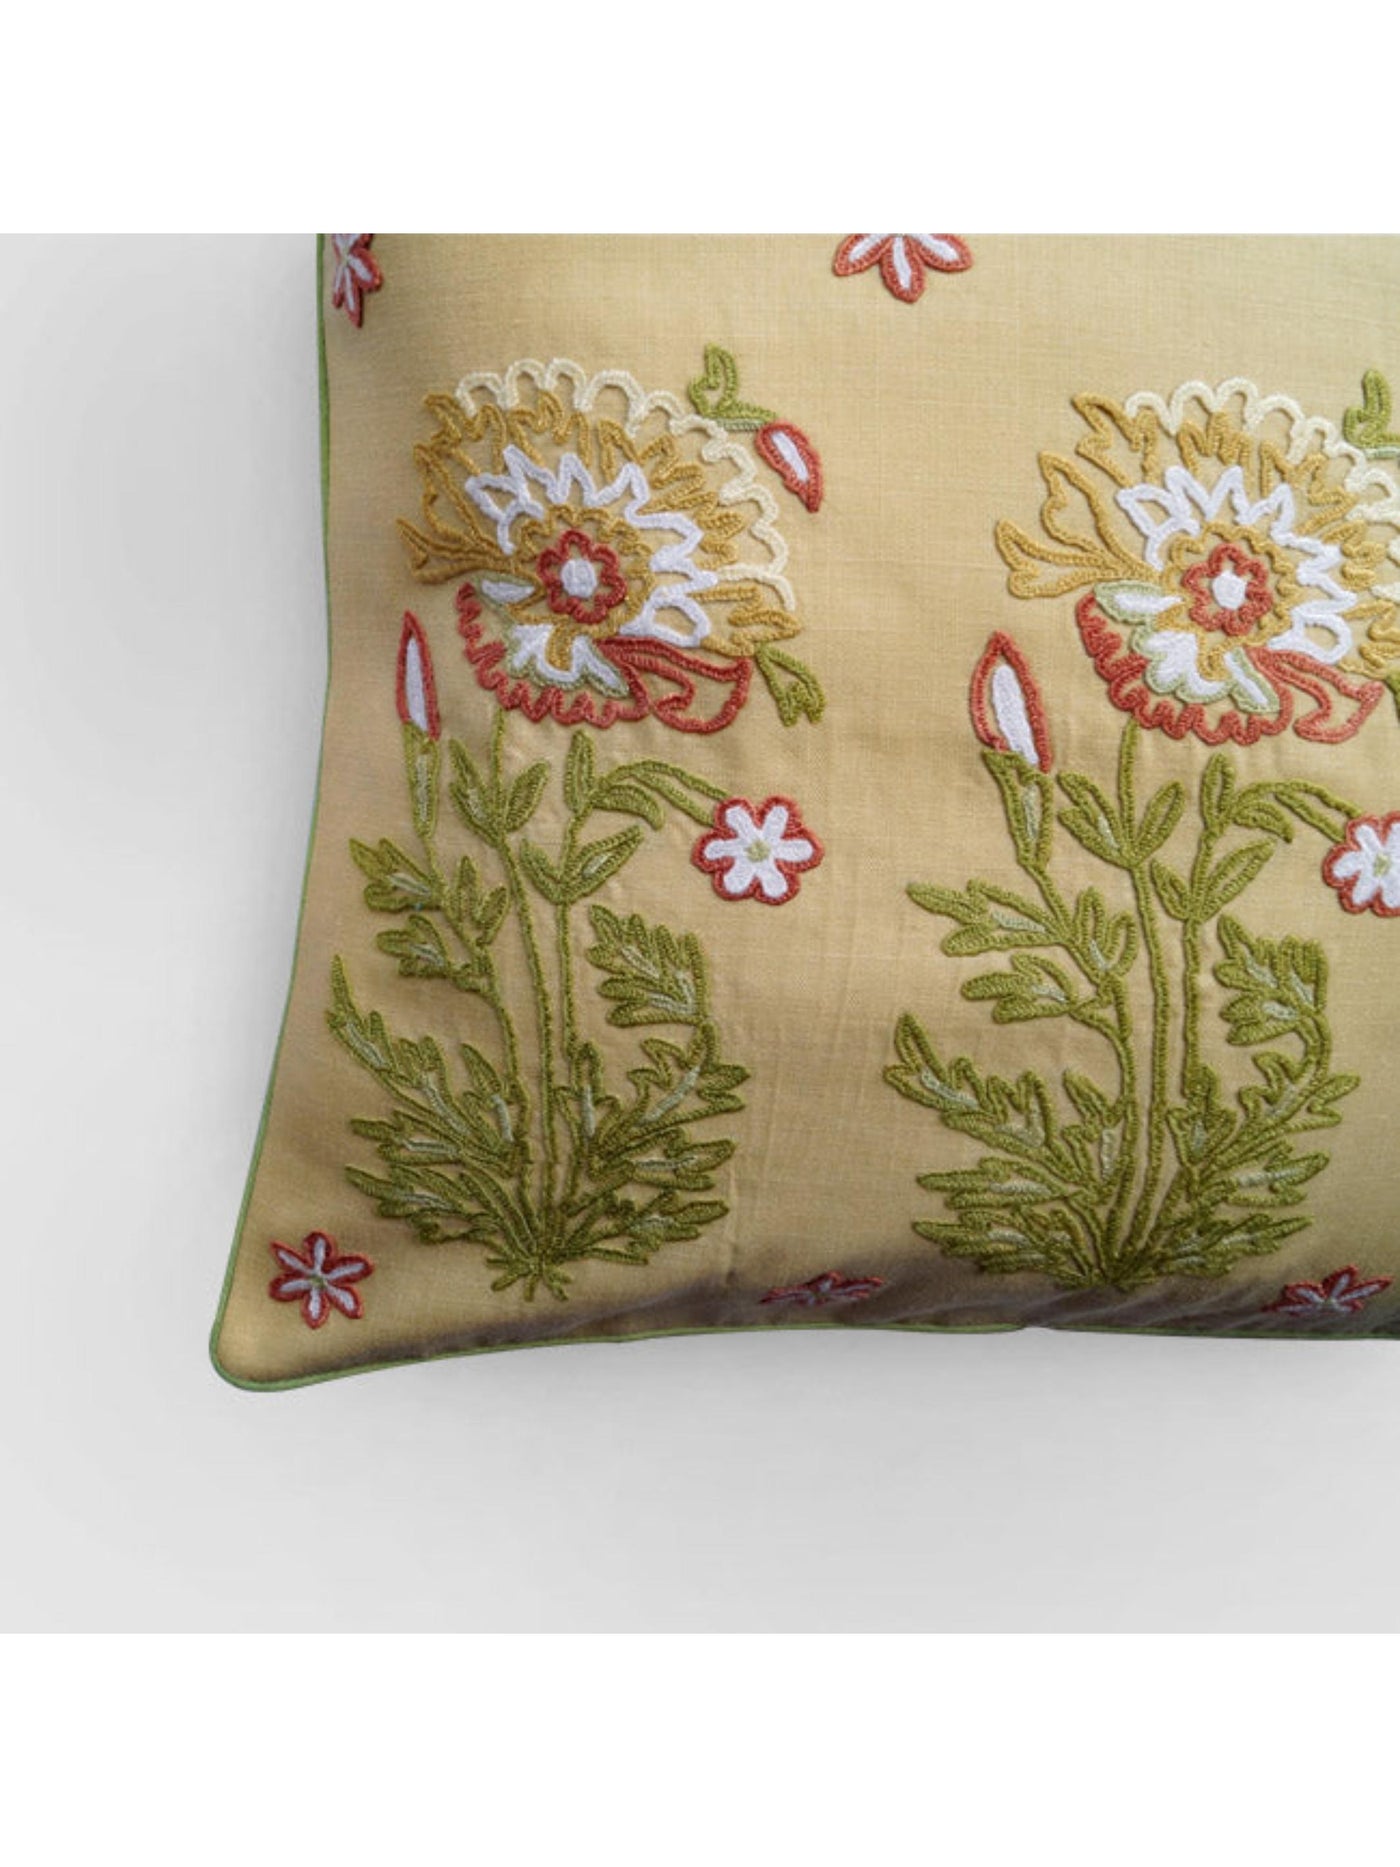 Cushion Cover - Gul Bahar Aari Embroidered Beige